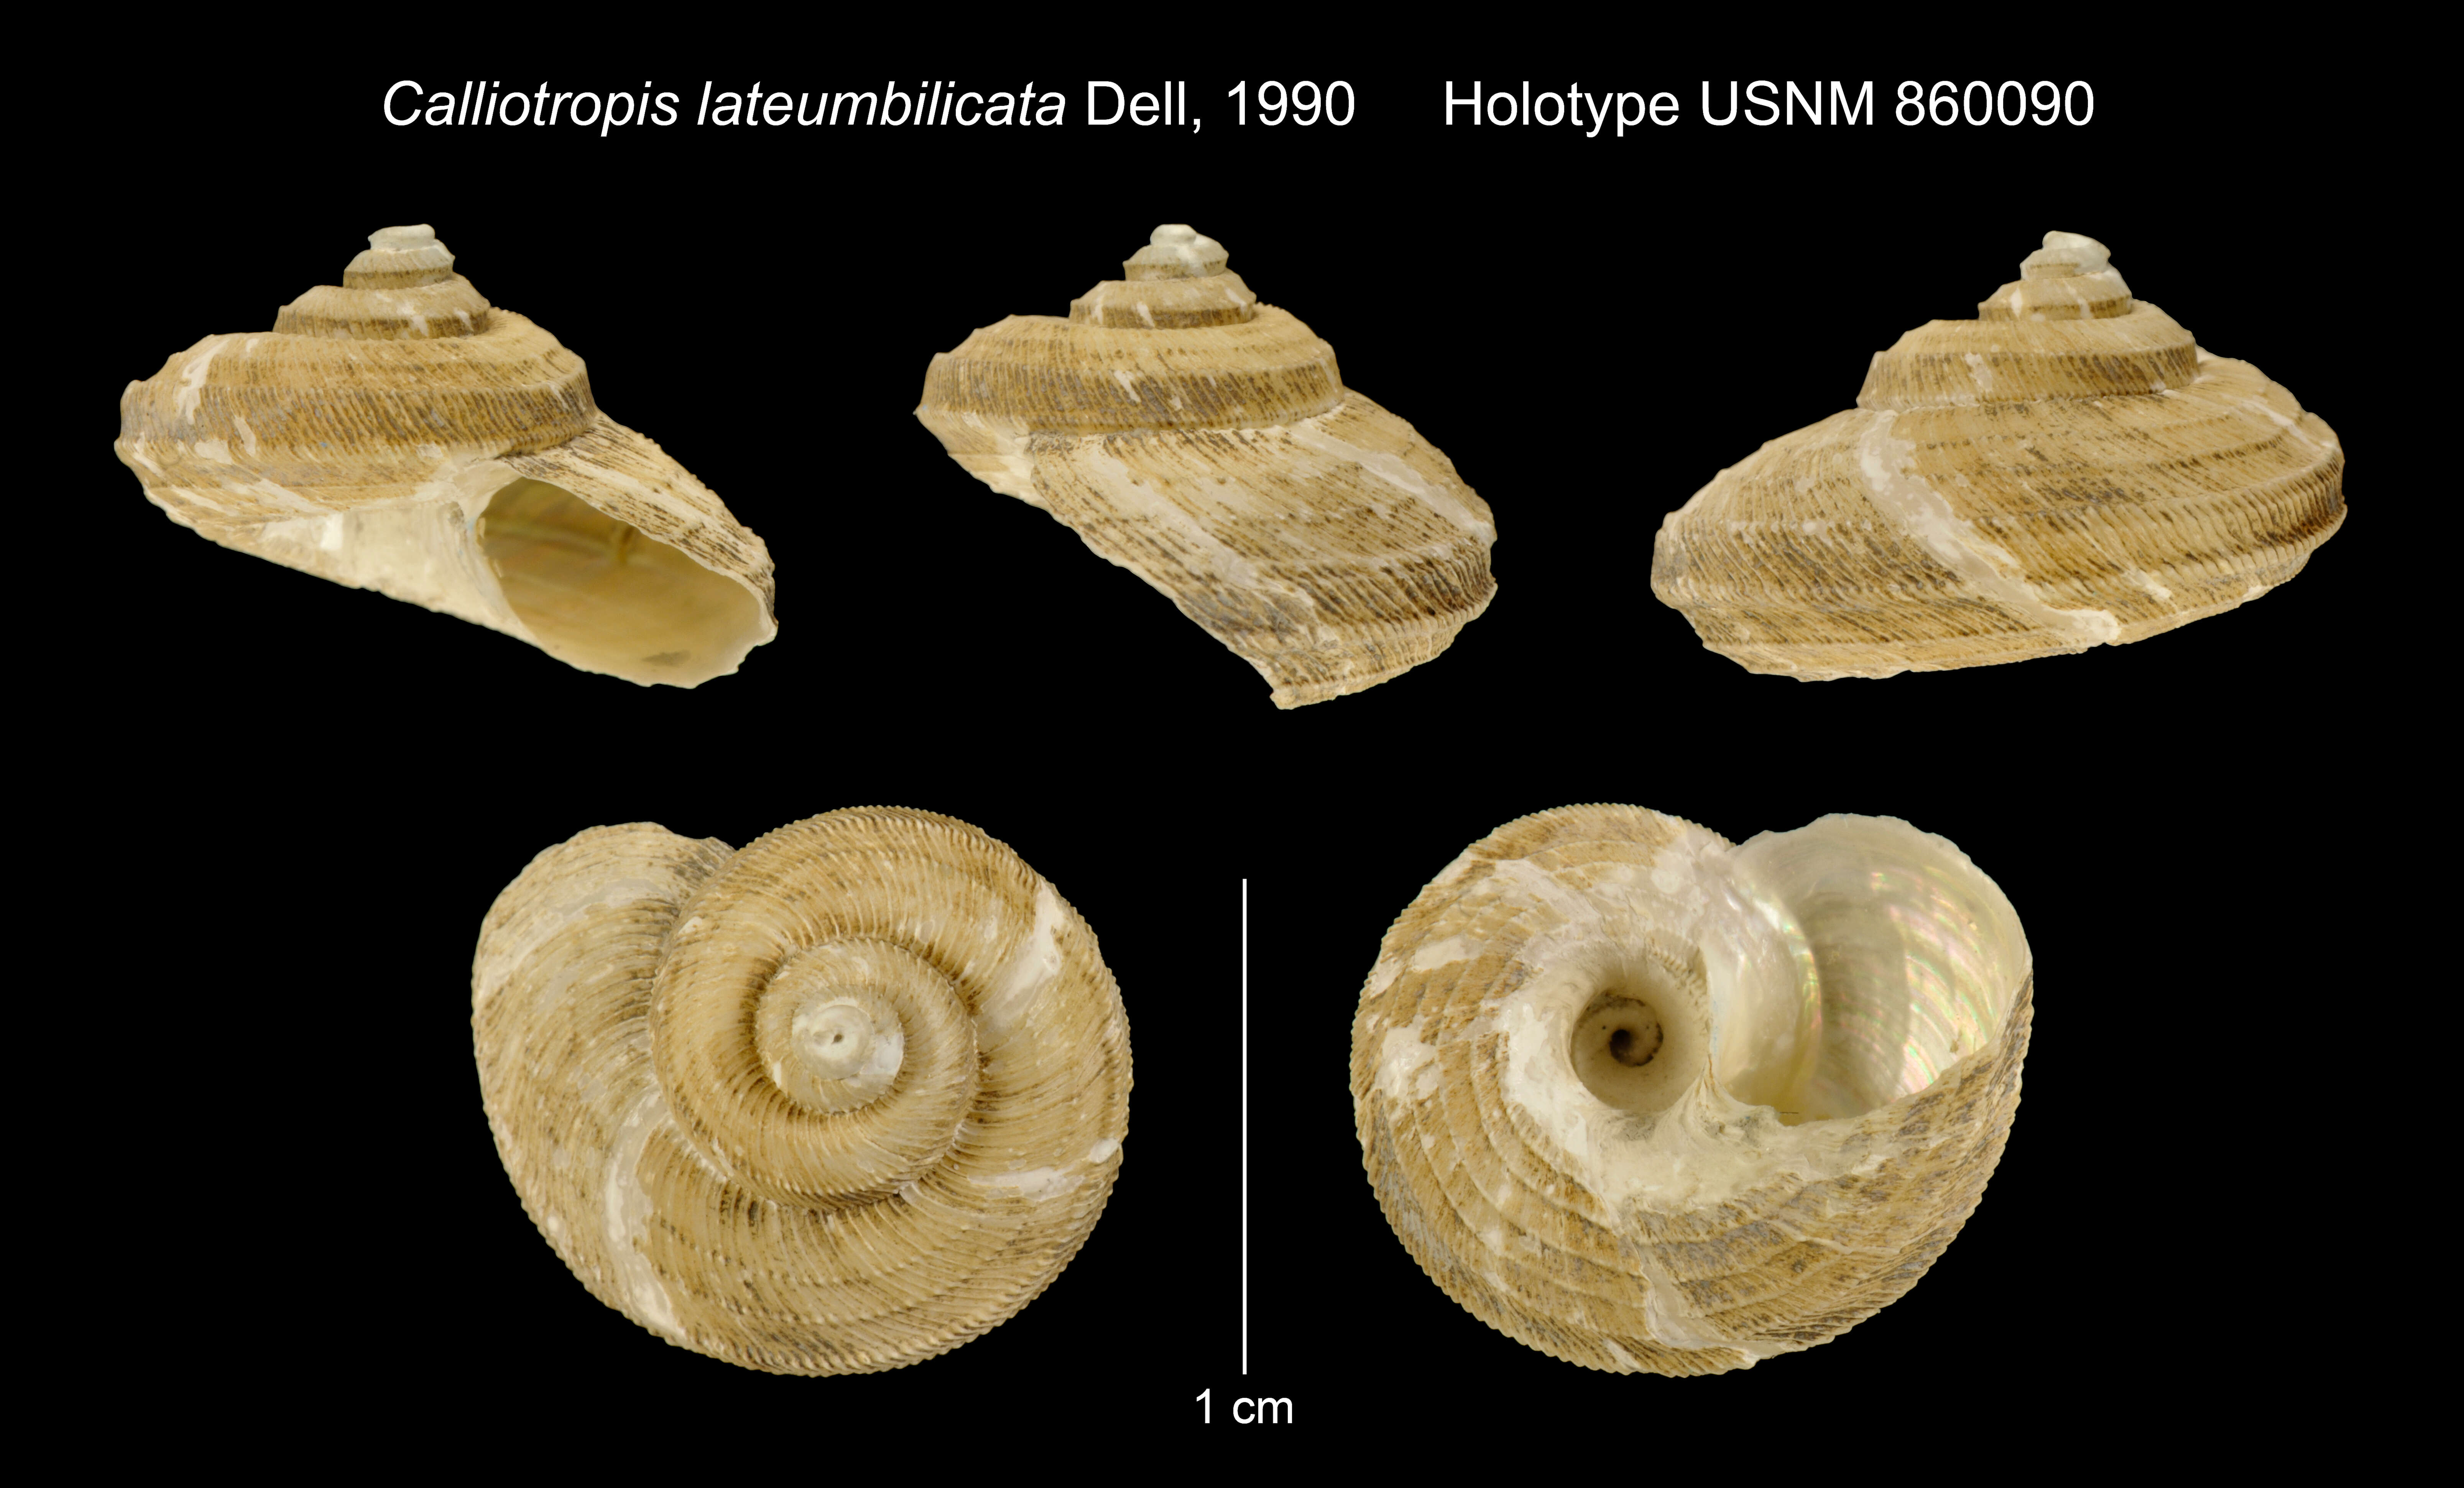 Image of Calliotropis lateumbilicata Dell 1990